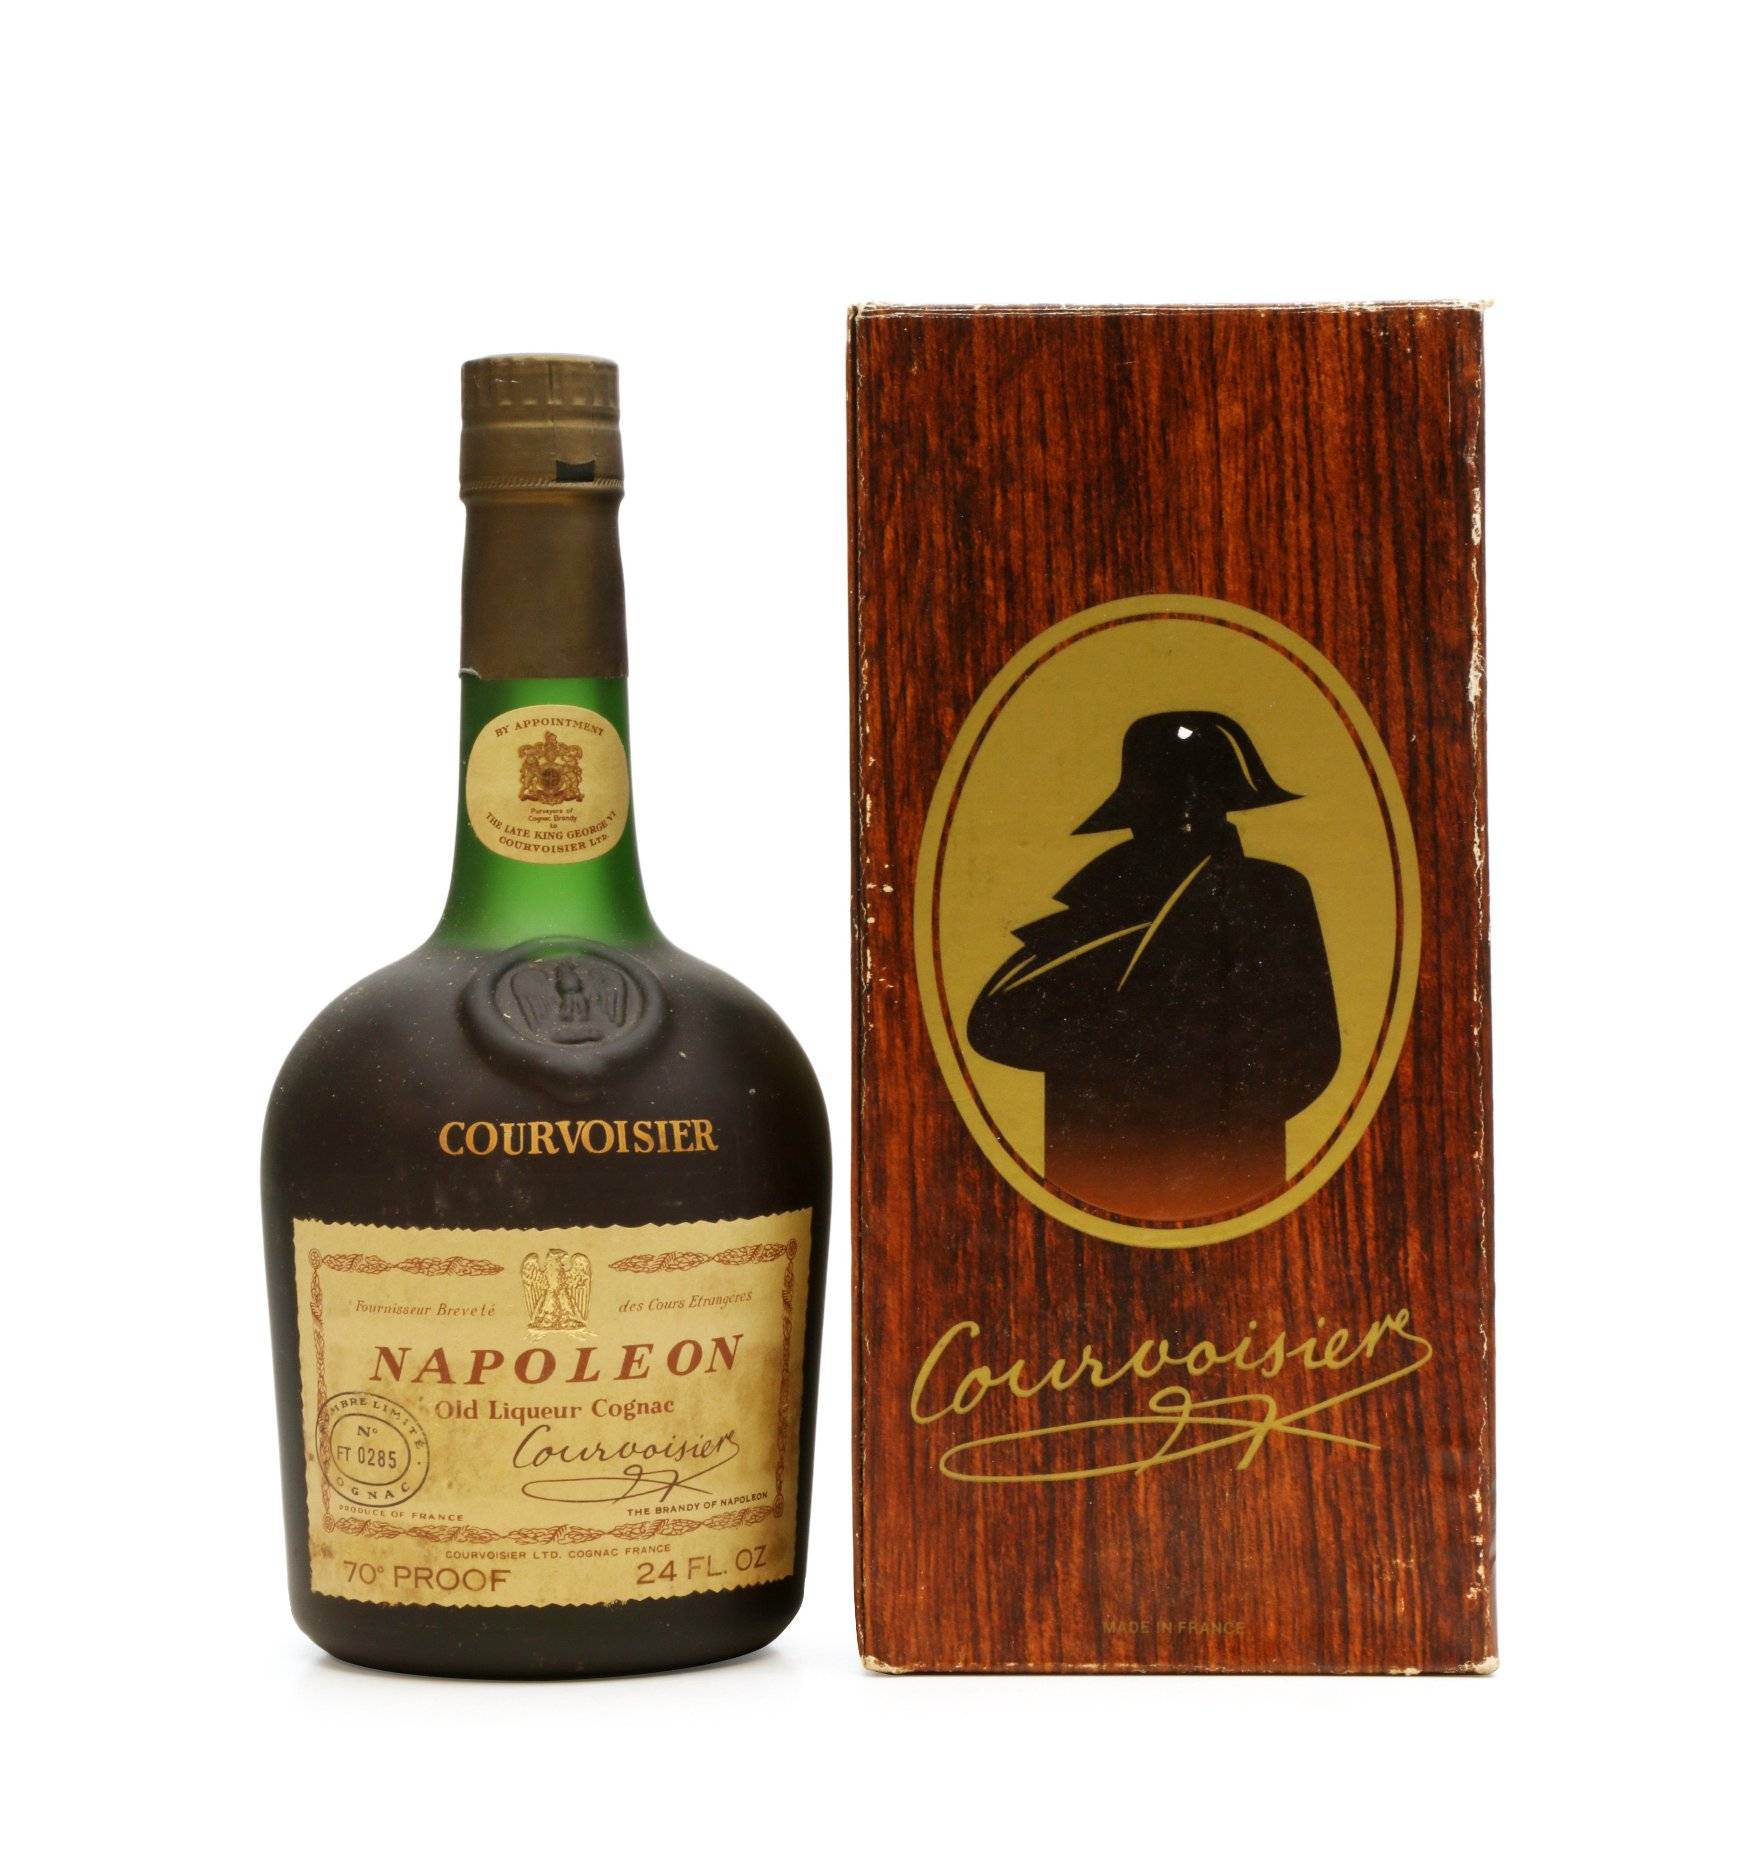 Napoleon Old Liqueur Cognac (70° Proof) - Just Whisky Auctions